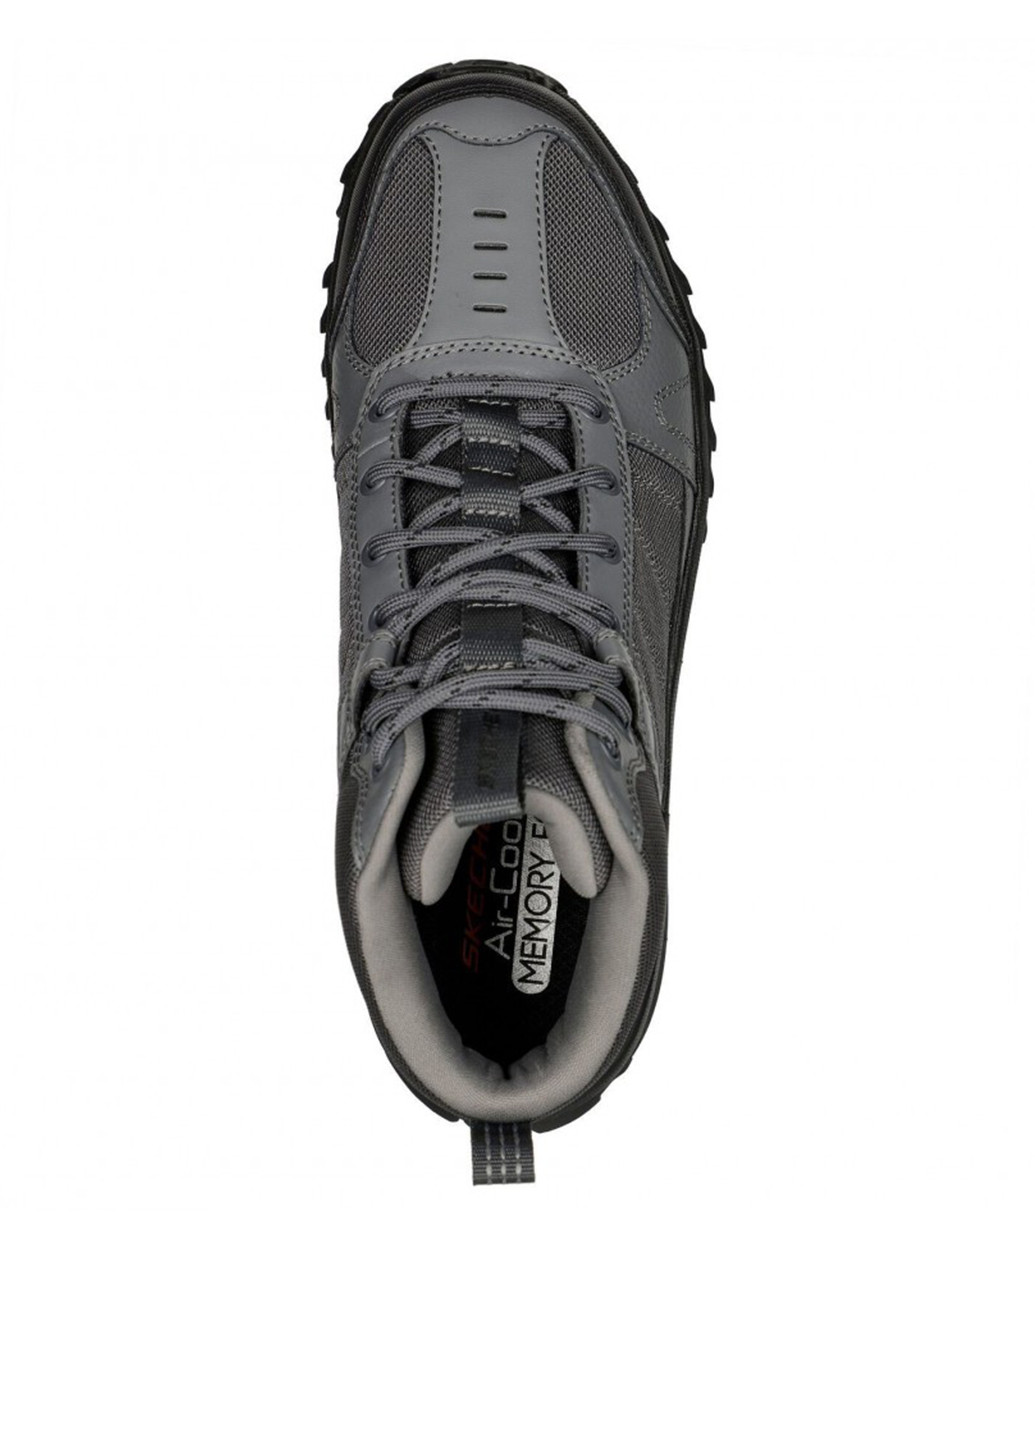 Темно-серые осенние ботинки Skechers